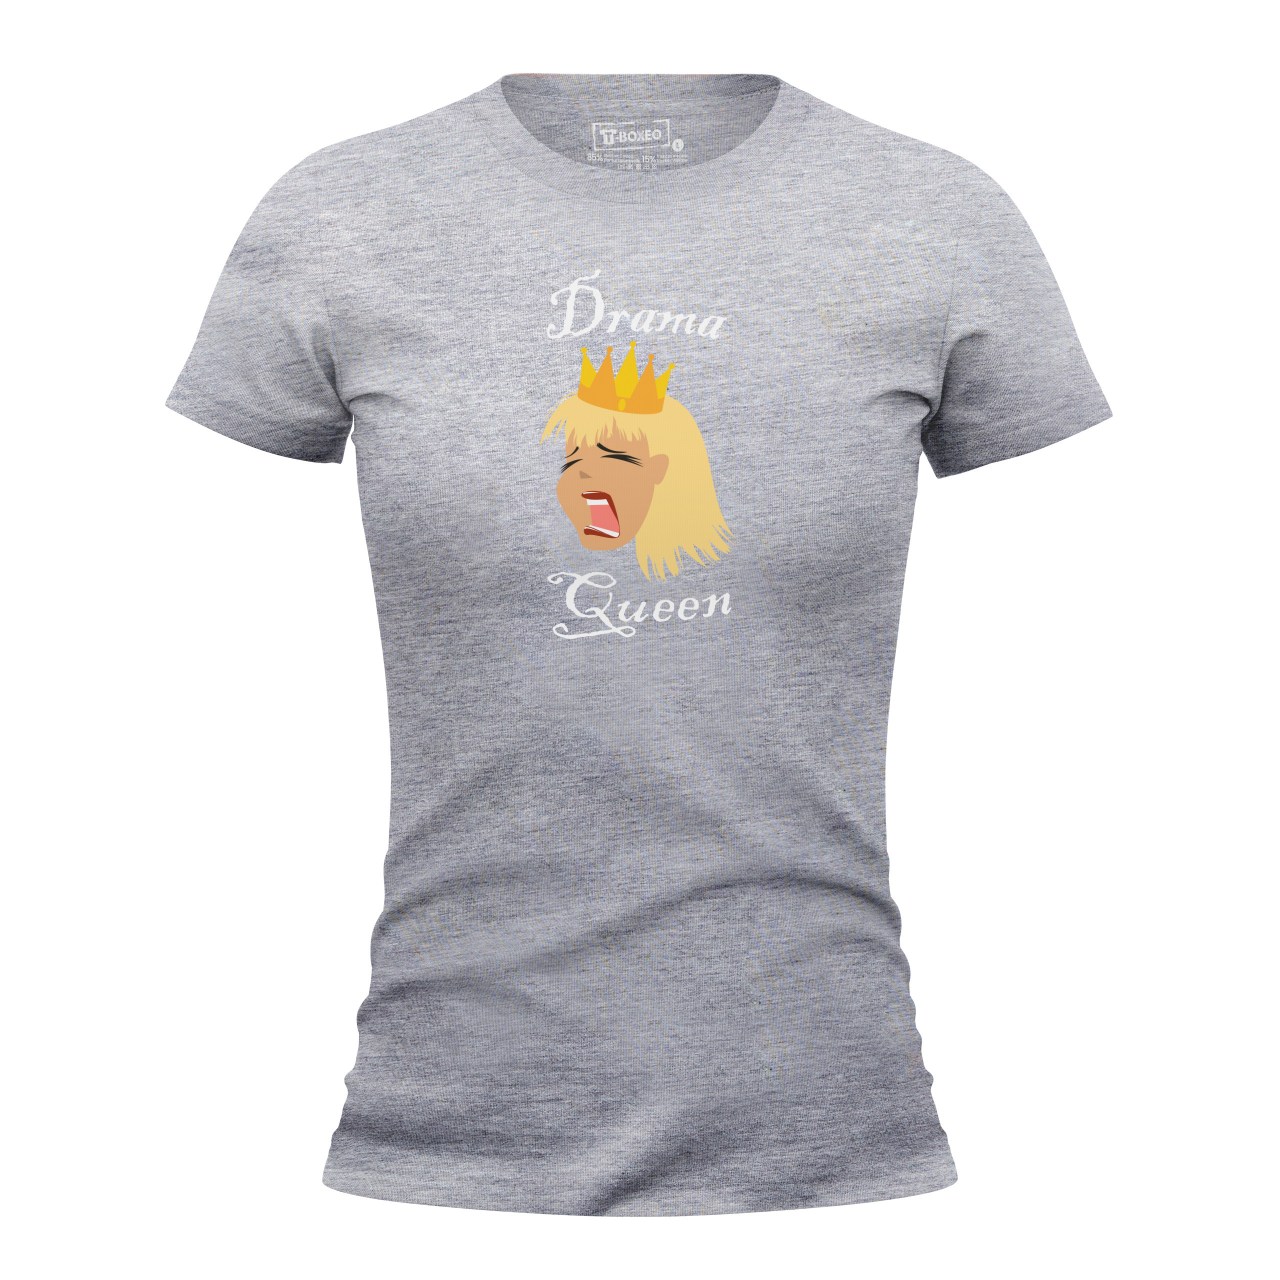 Dámské tričko s potiskem “Drama Queen”